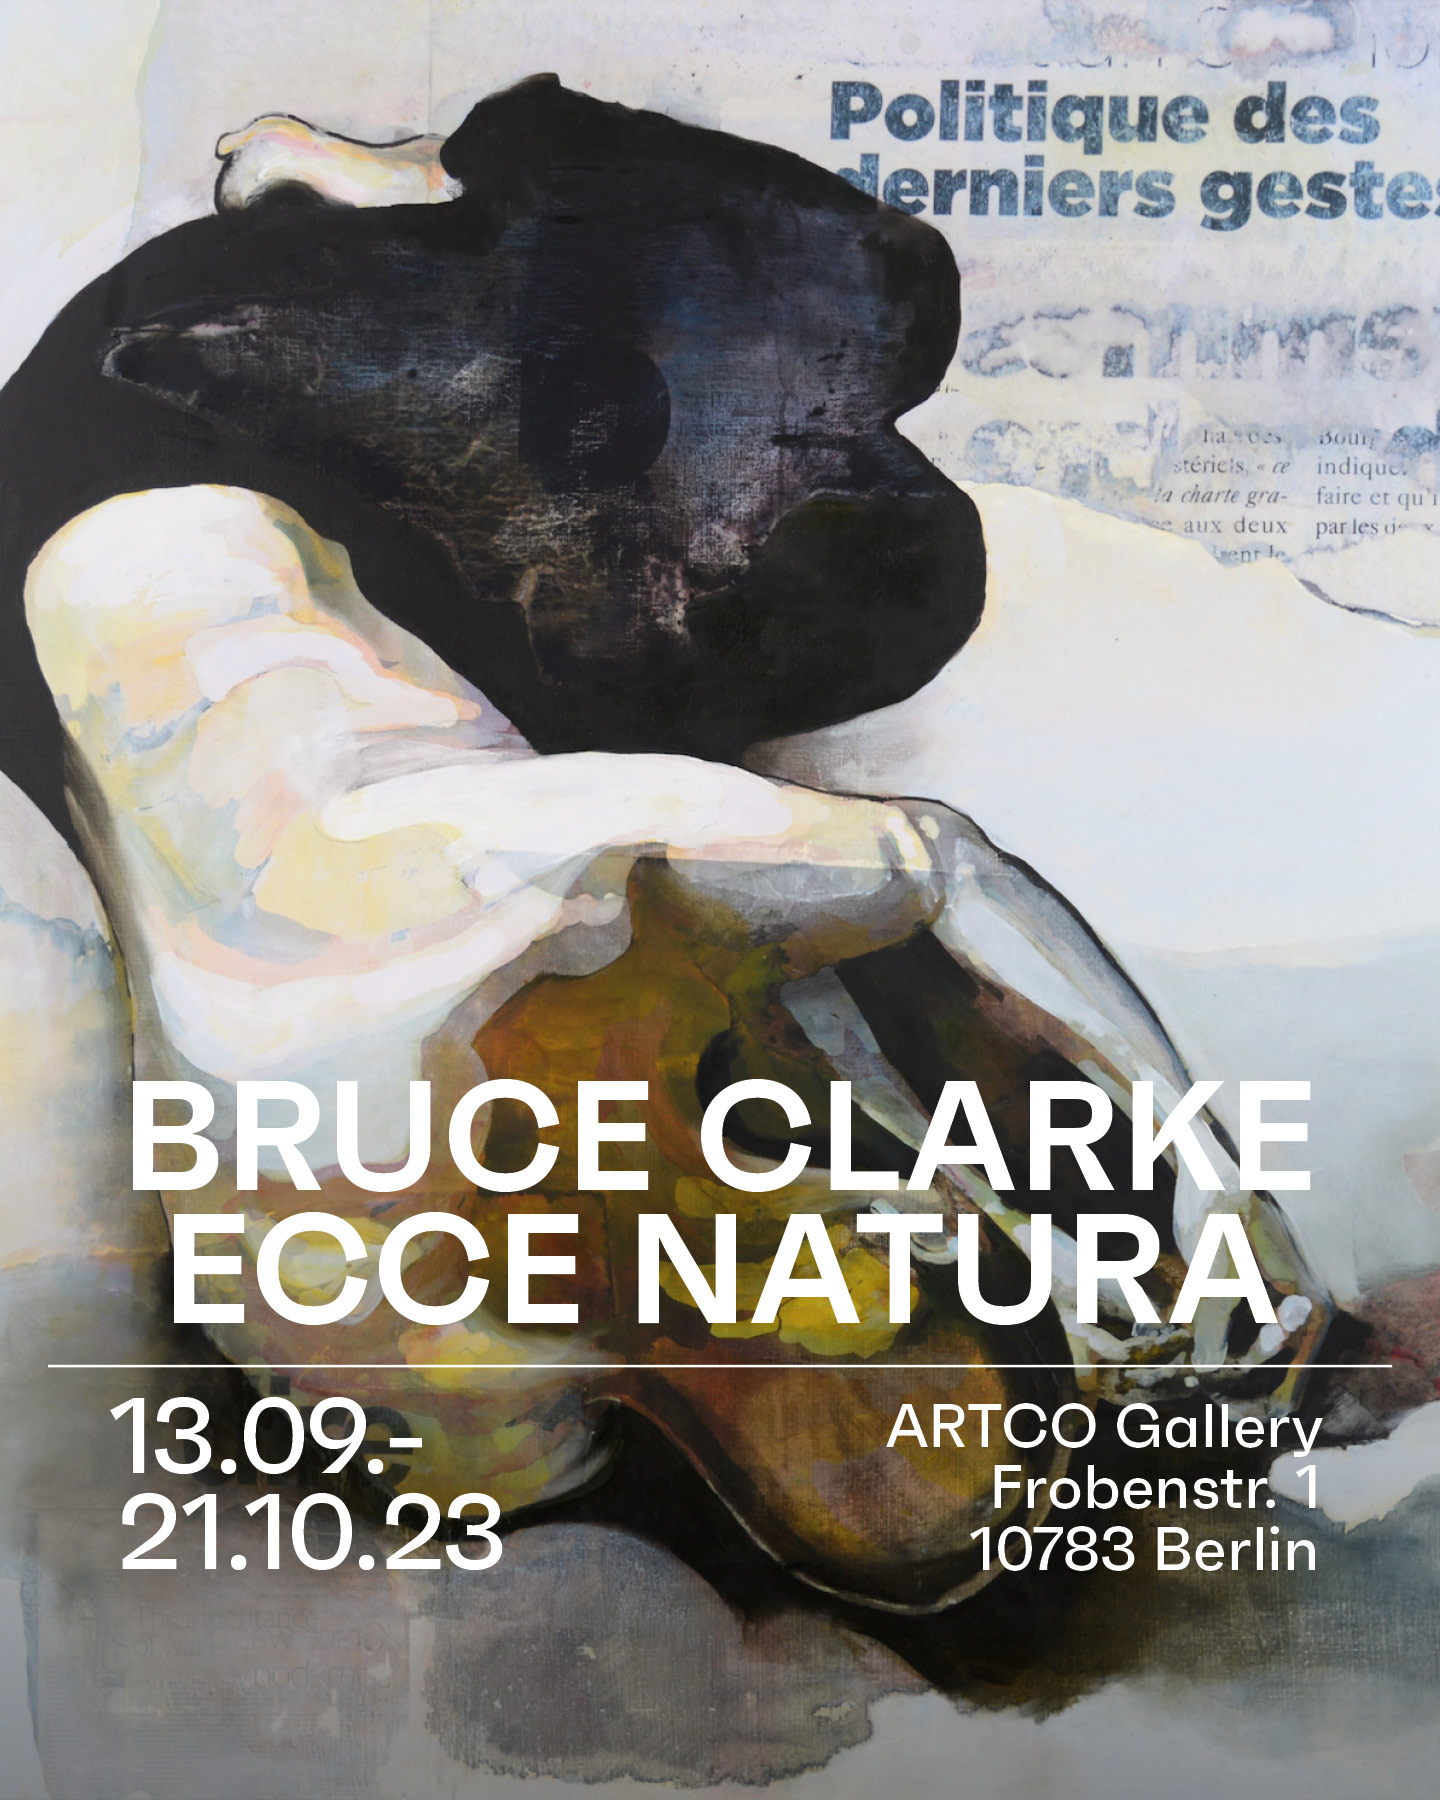 Ecce Nature ARTCO Gallery